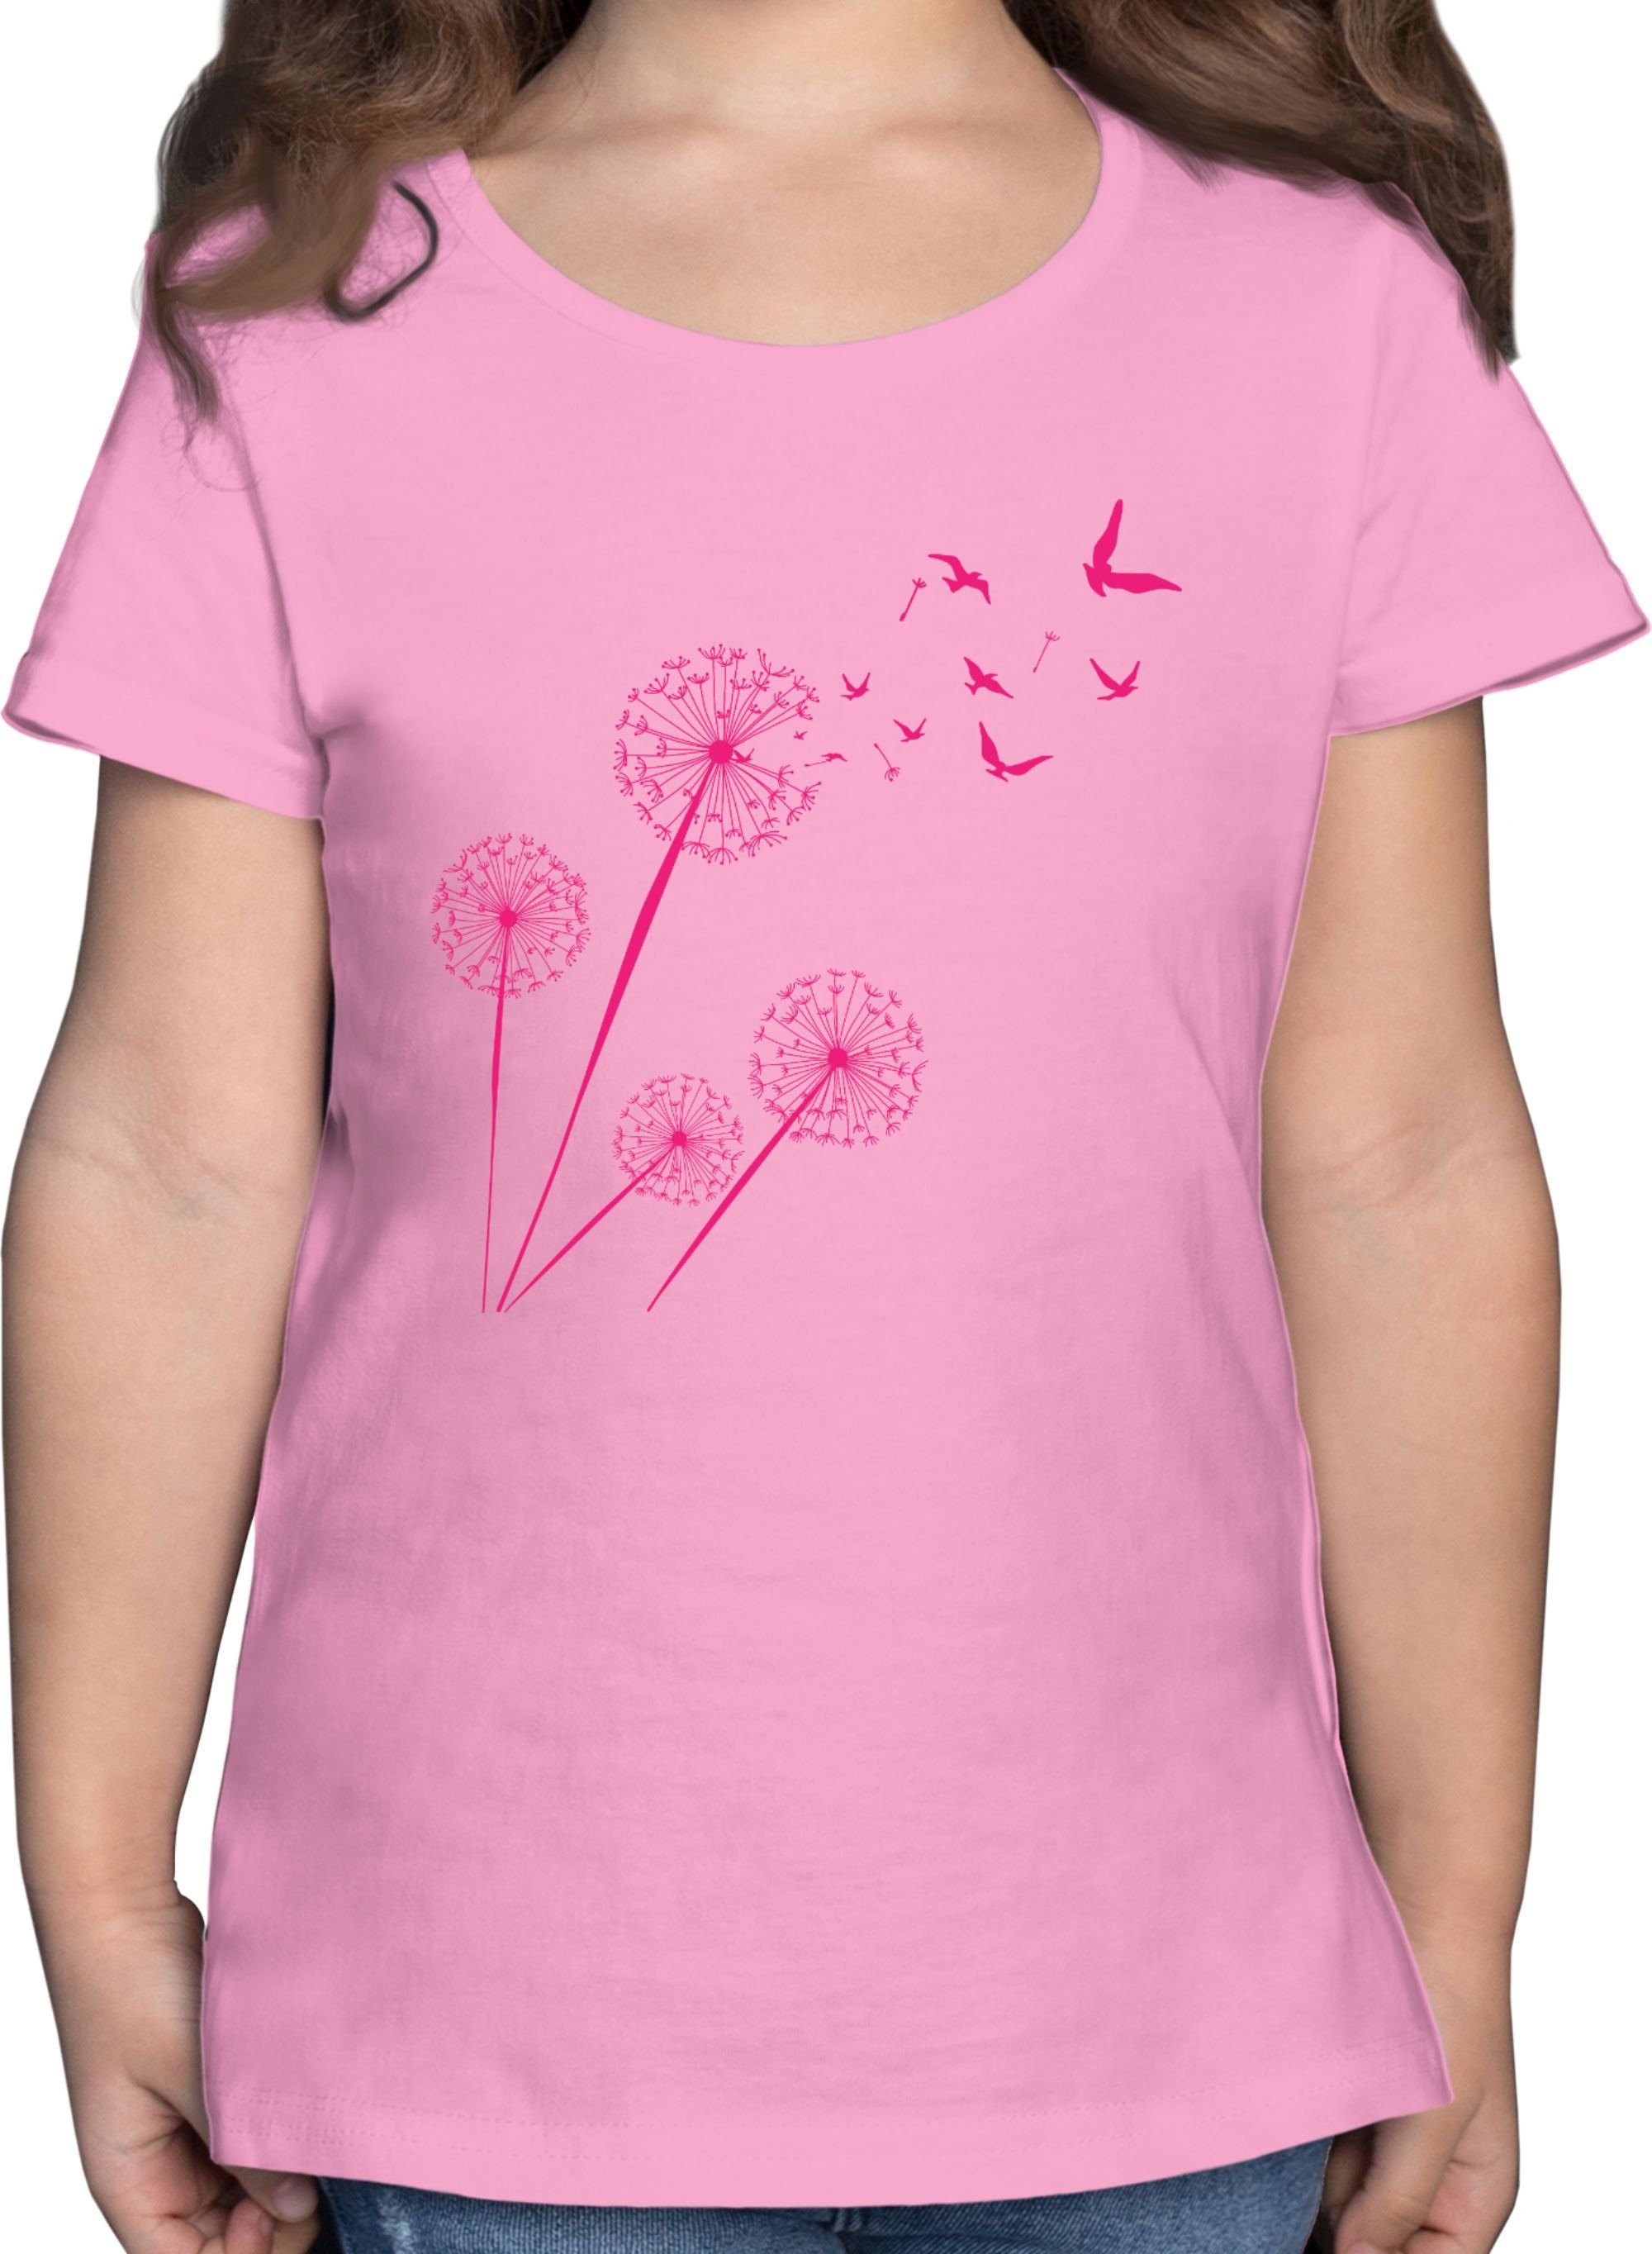 Shirtracer T-Shirt Pusteblume mit Vögel Kinderkleidung und Co 1 Rosa